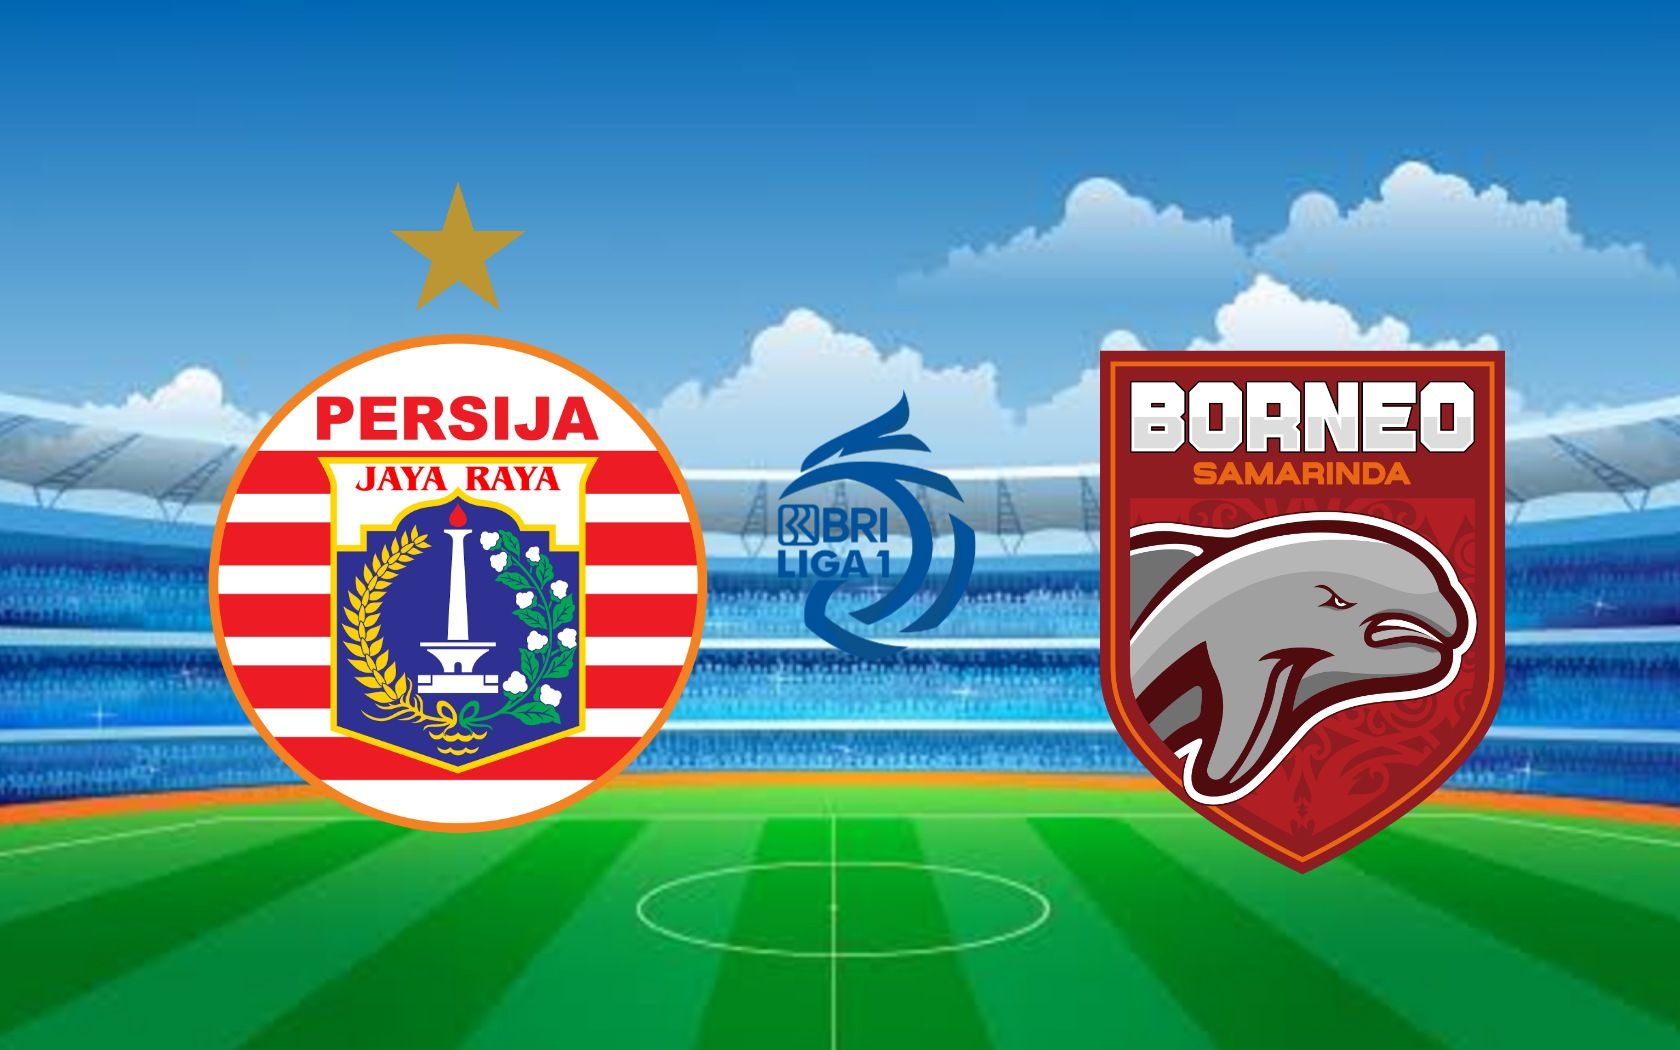 LIVE STREAMING Indosiar, Nonton Persija vs Borneo FC di BRI Liga 1 Malam Ini Link Resmi Vidio.com